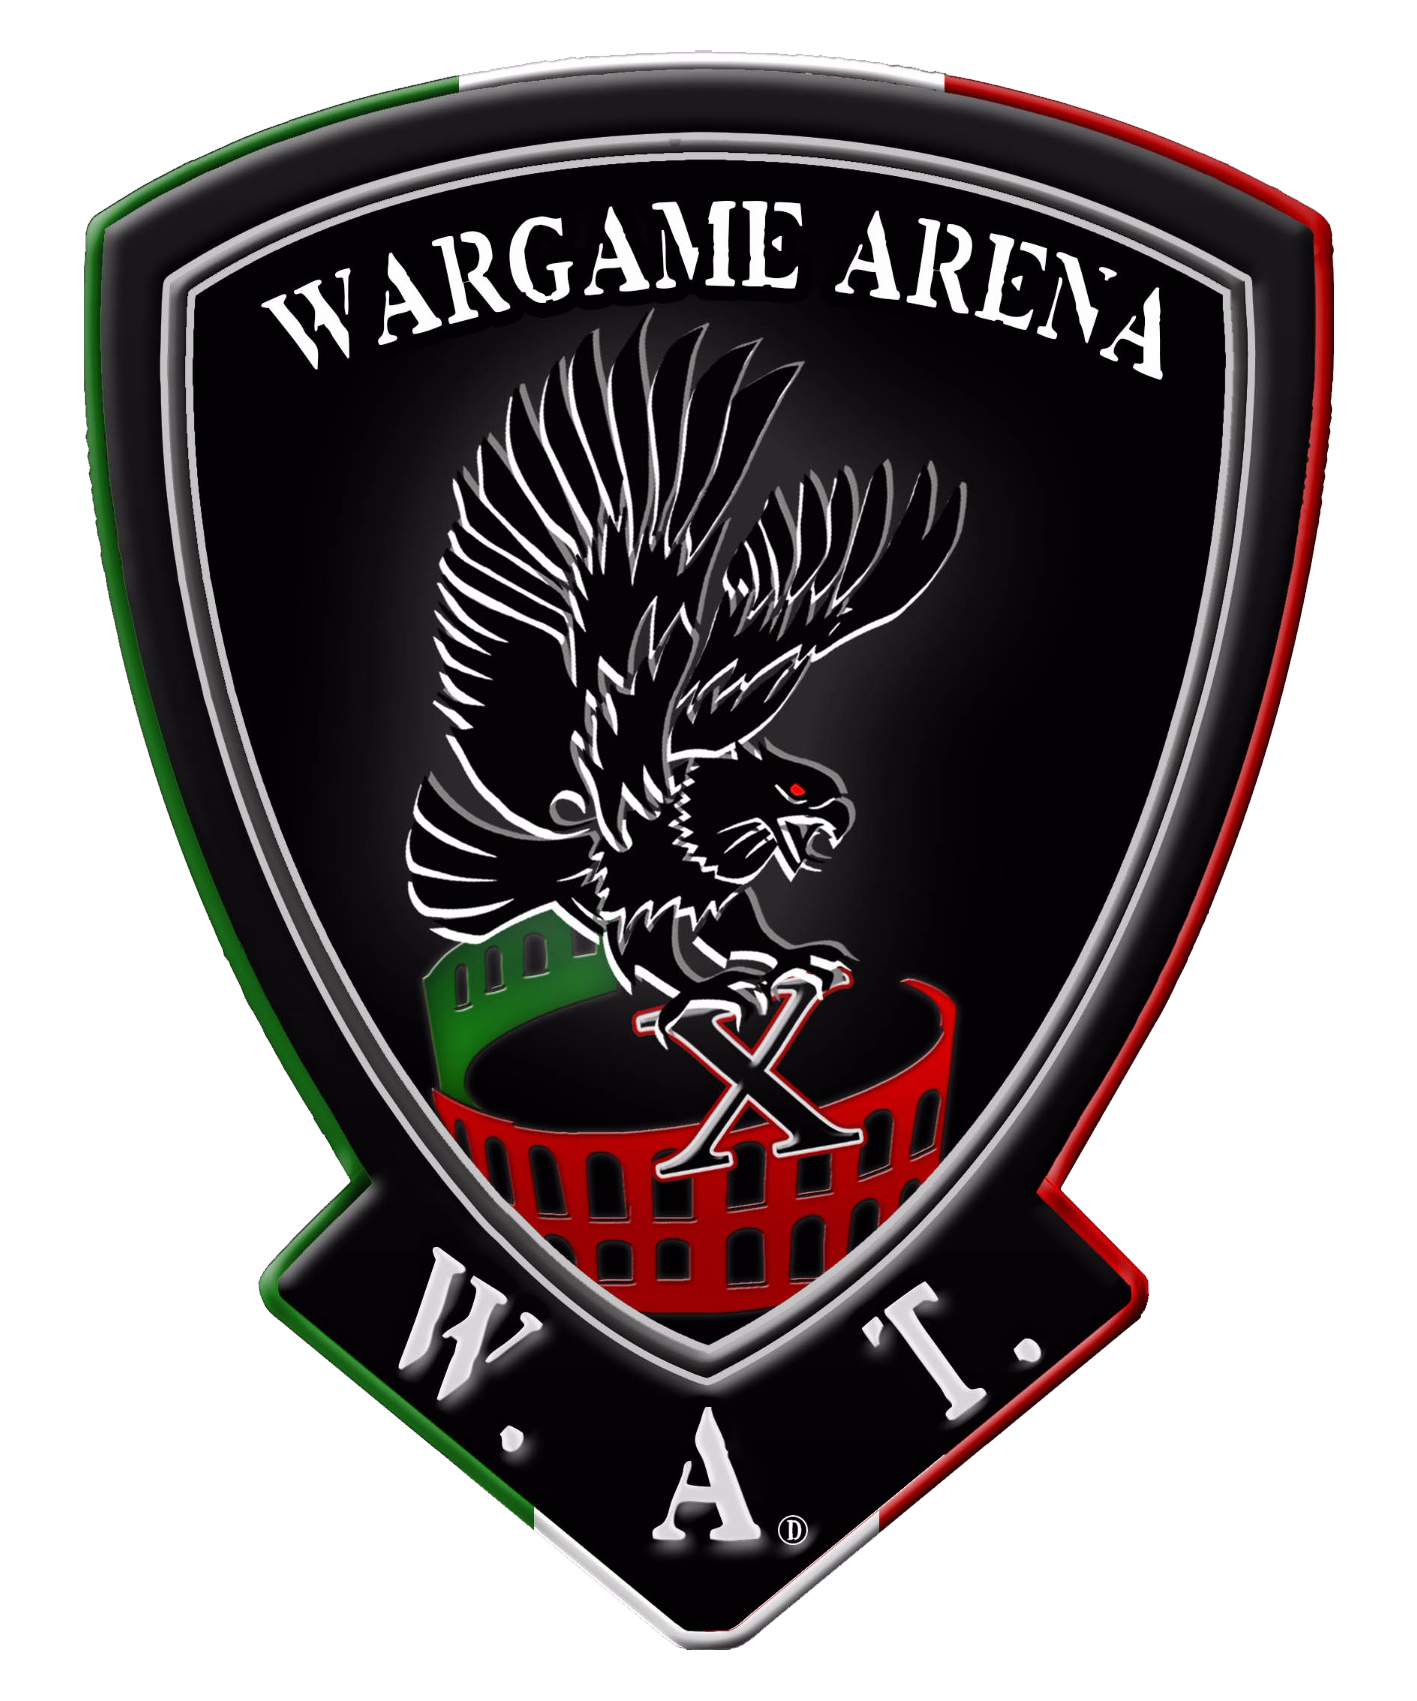 WarGame Arena - SoftAir Cosenza